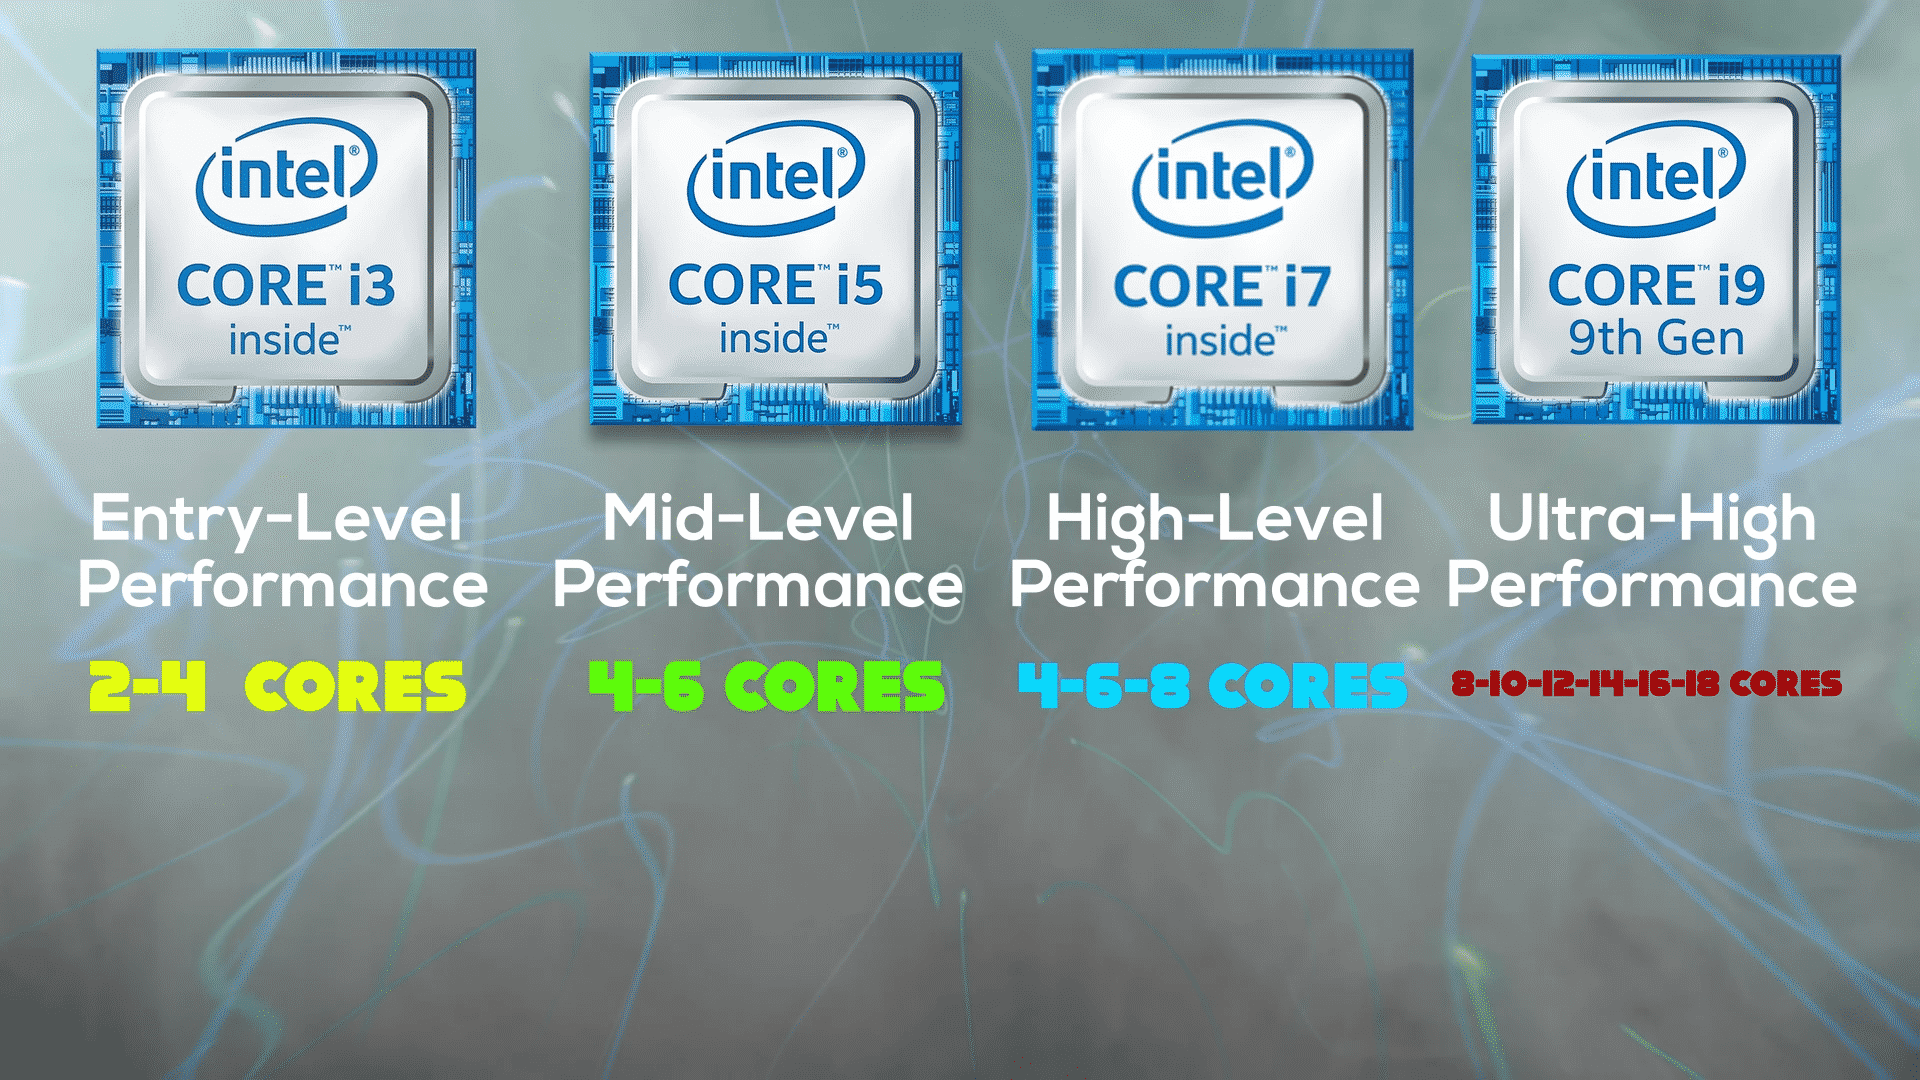 Entrylevel cpus vs Mid-level performance cpus vs High-level performance cpus vs Ultra-High Performance CPU Core counts